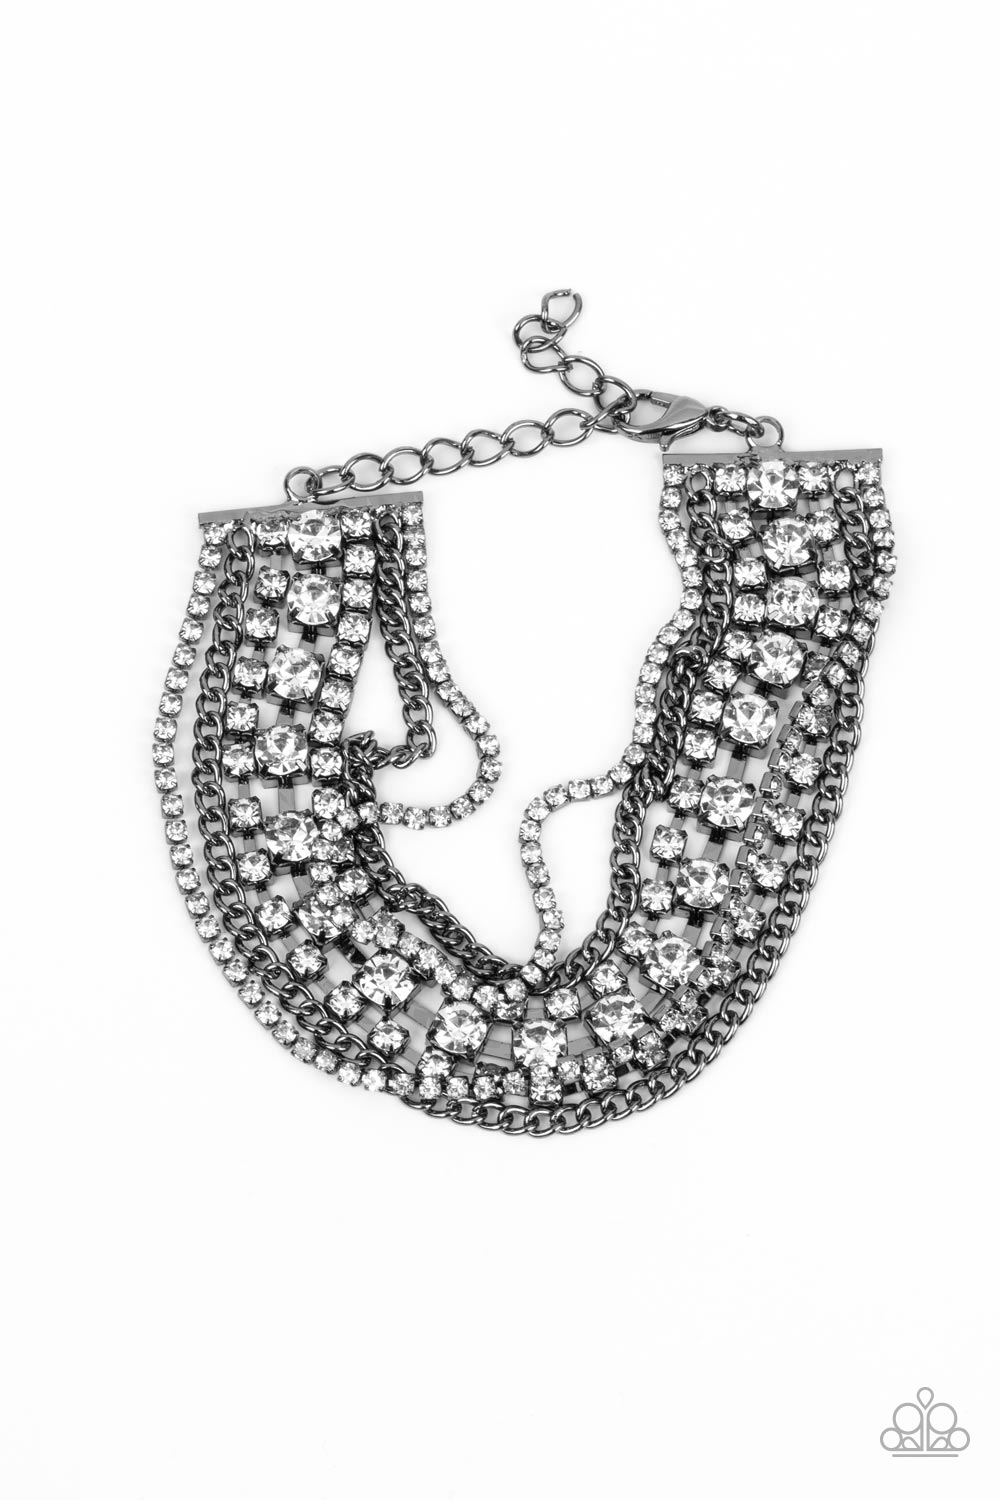 Interstellar Interlude Gunmetal Black &amp; White Rhinestone Chain Bracelet - Paparazzi Accessories- lightbox - CarasShop.com - $5 Jewelry by Cara Jewels